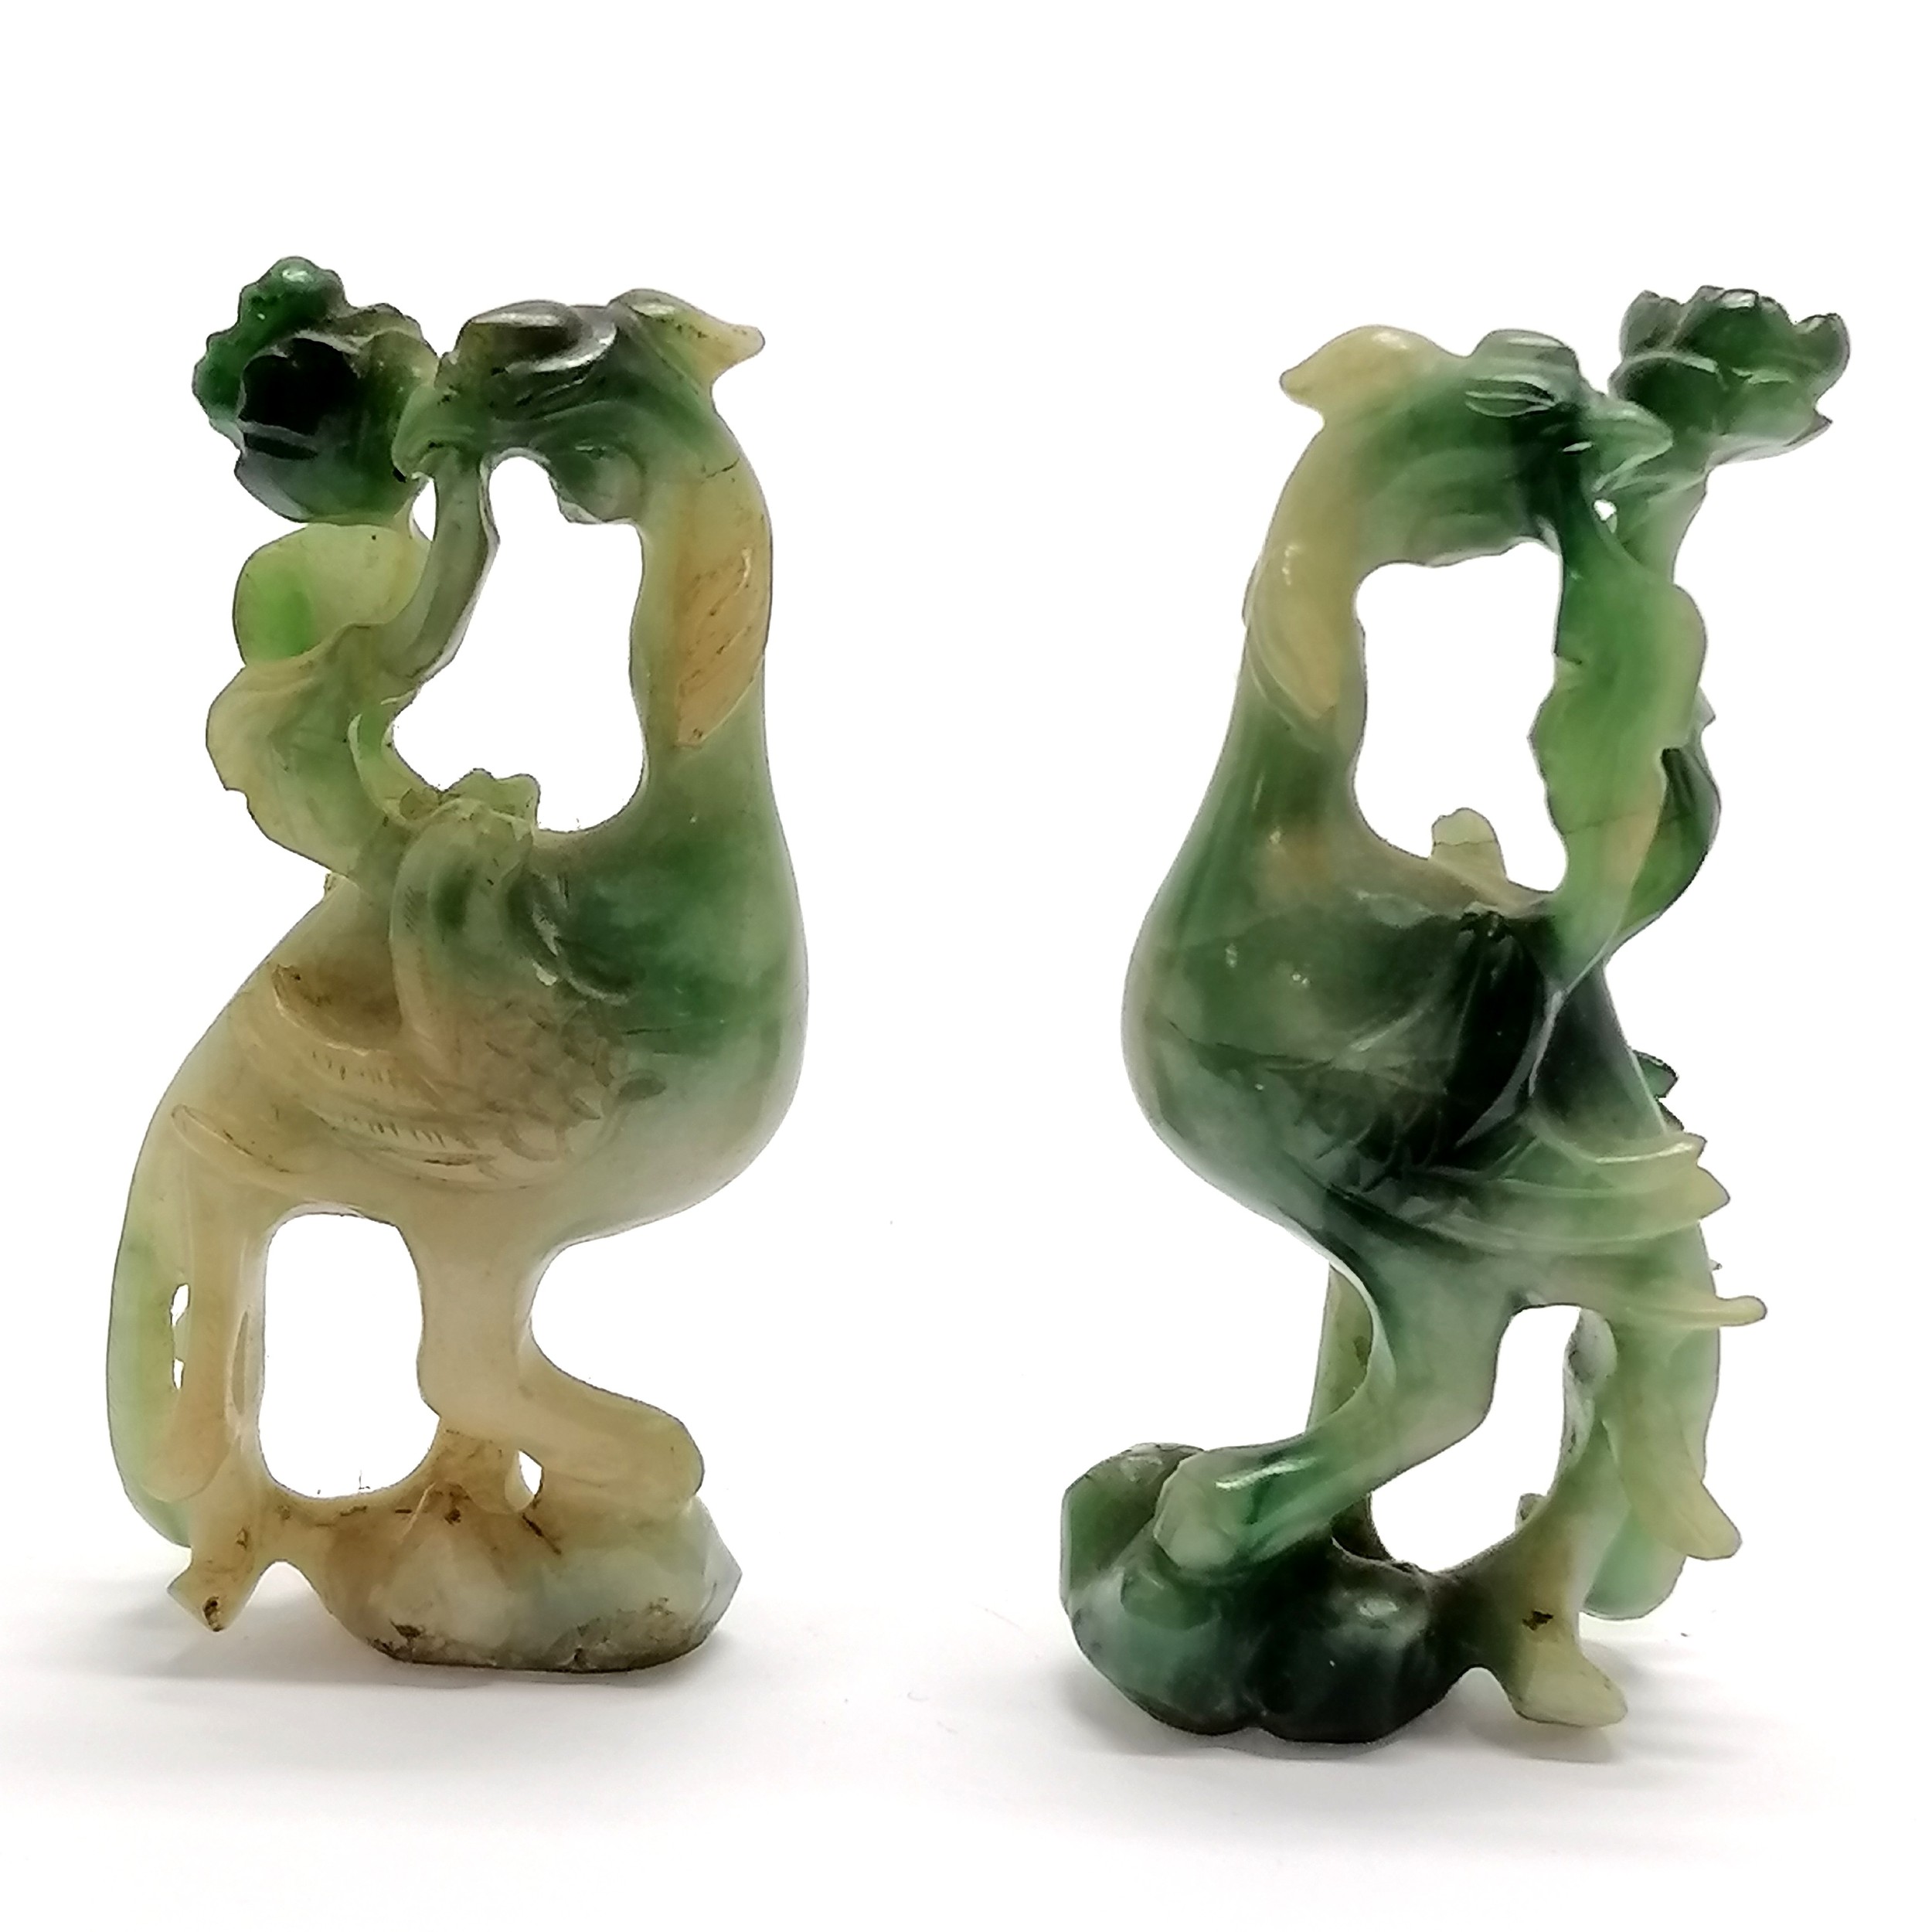 Pair of antique Chinese hand caved hardstone jade bird figures - 6.5cm high ~ 1 has small repair